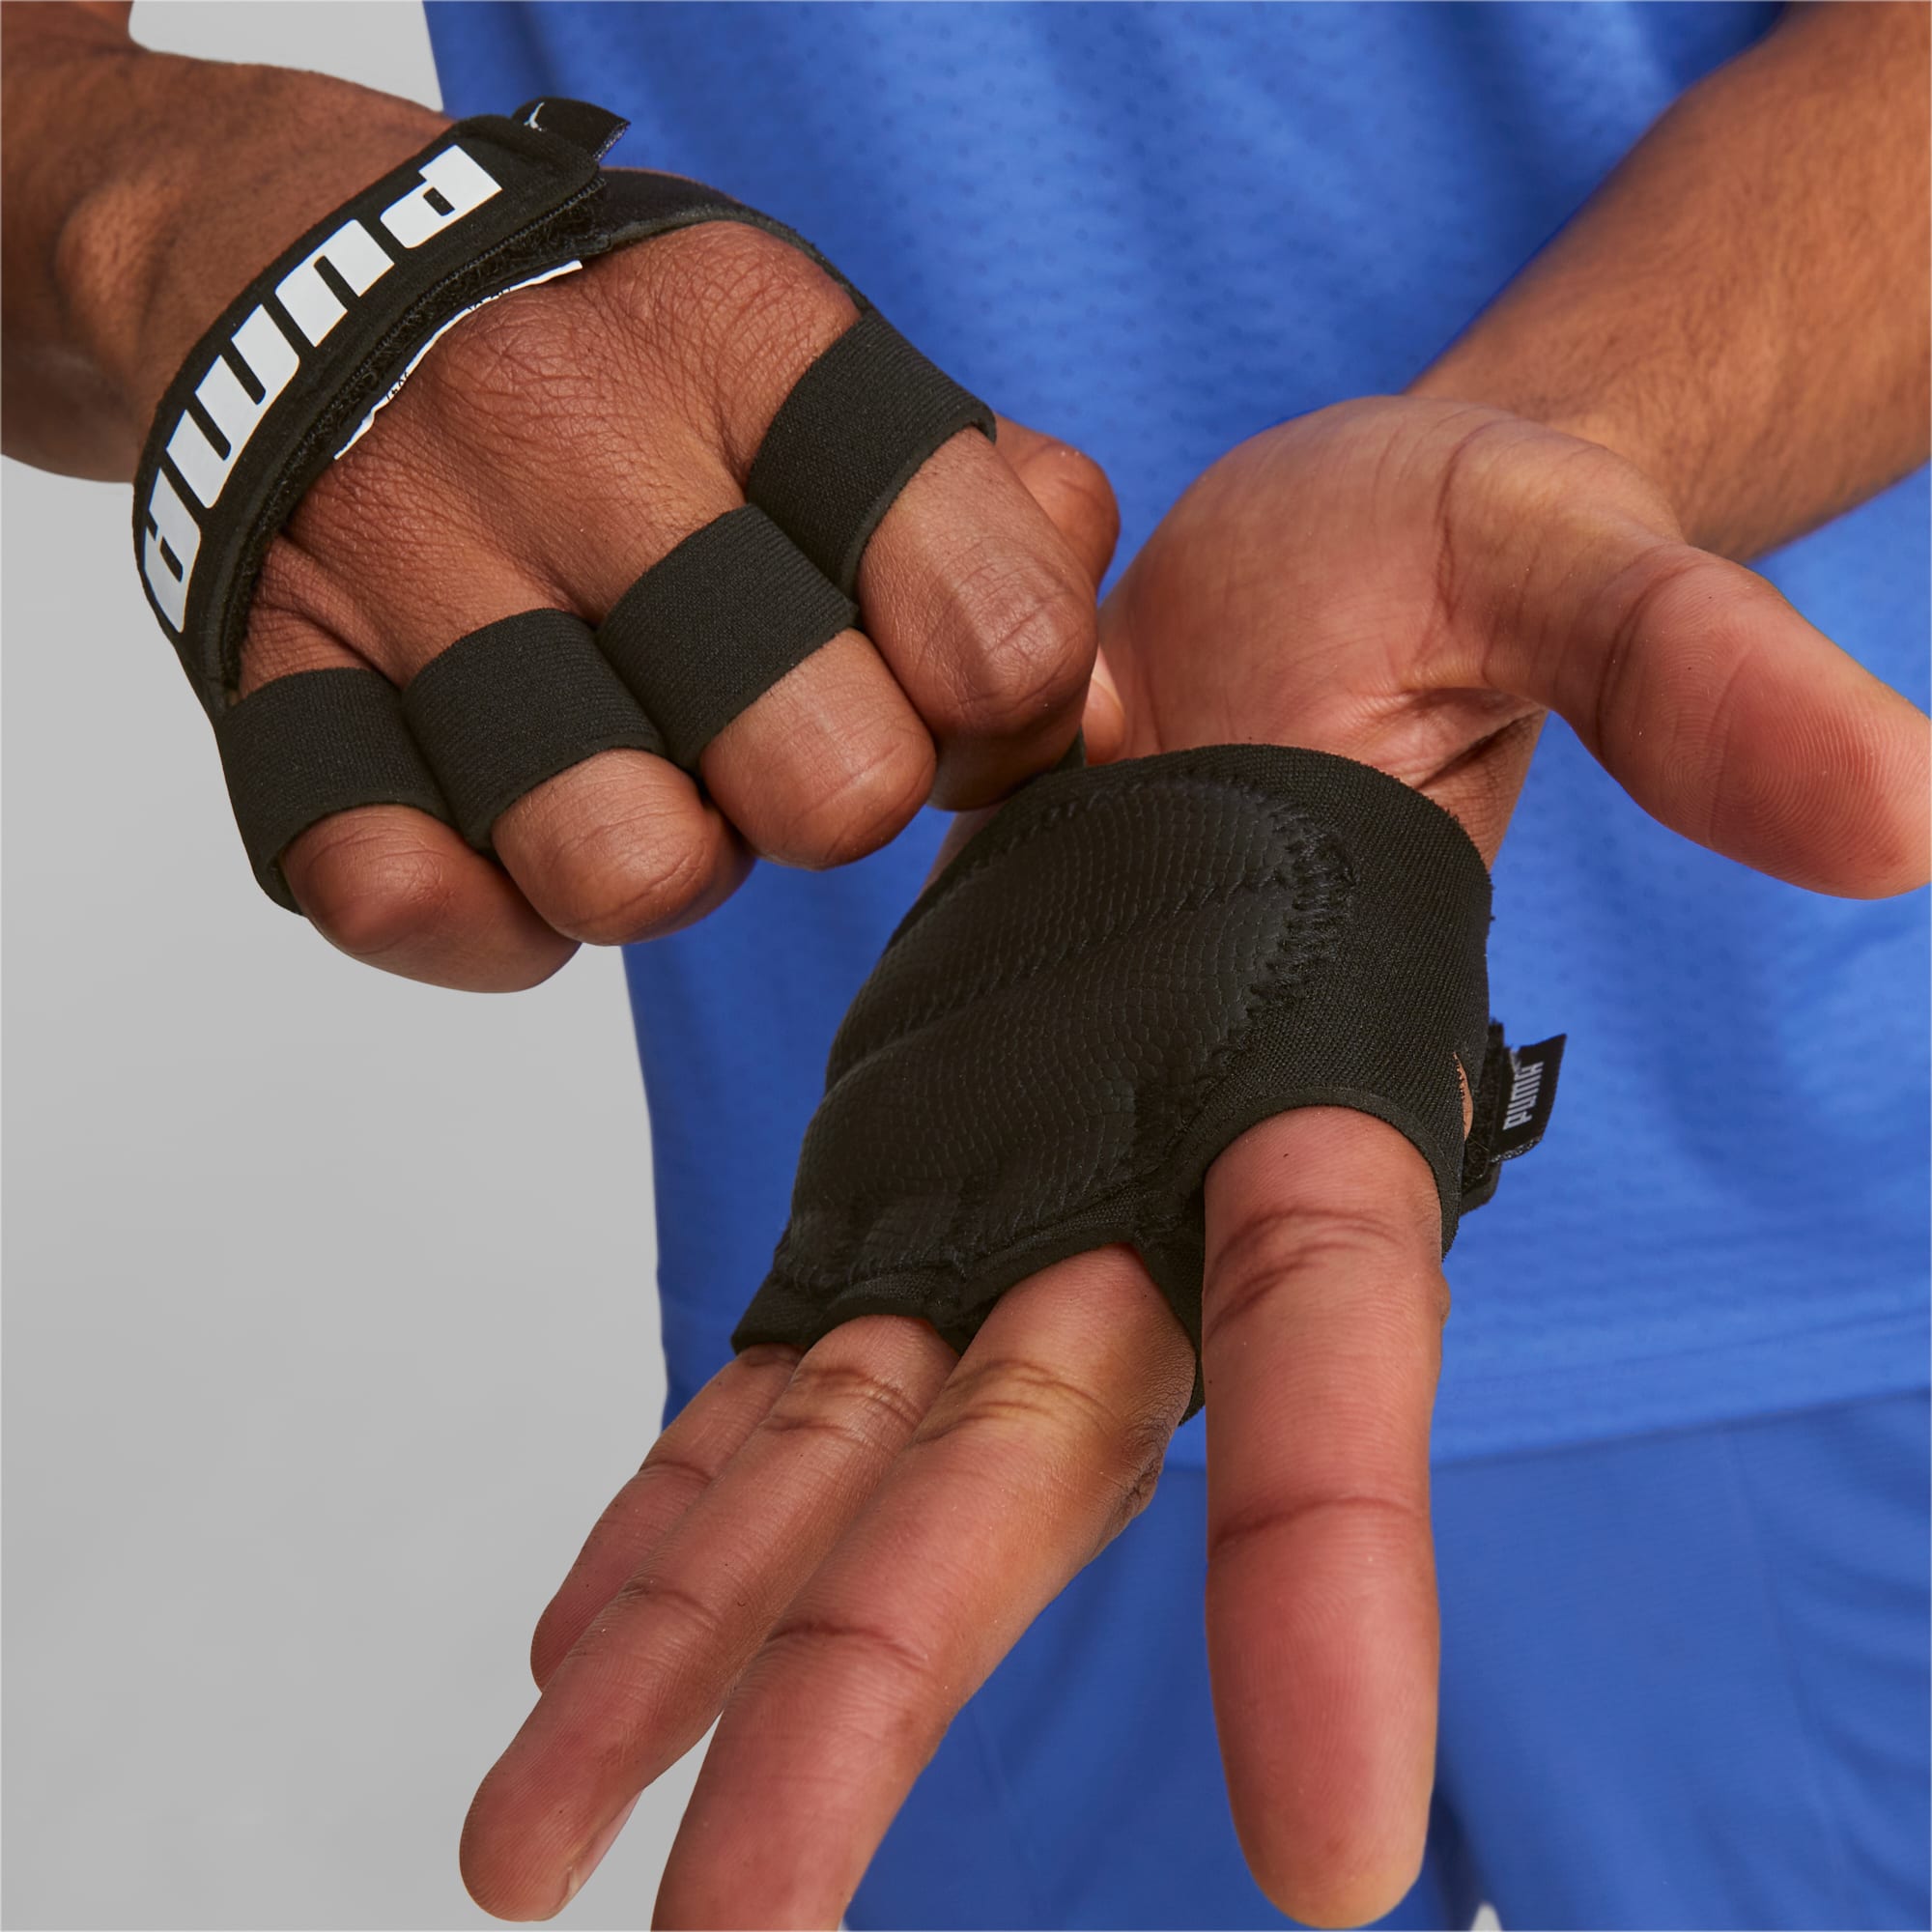 Men's PUMA Essential Training Grip Gloves, Black/White, Size L, Accessories